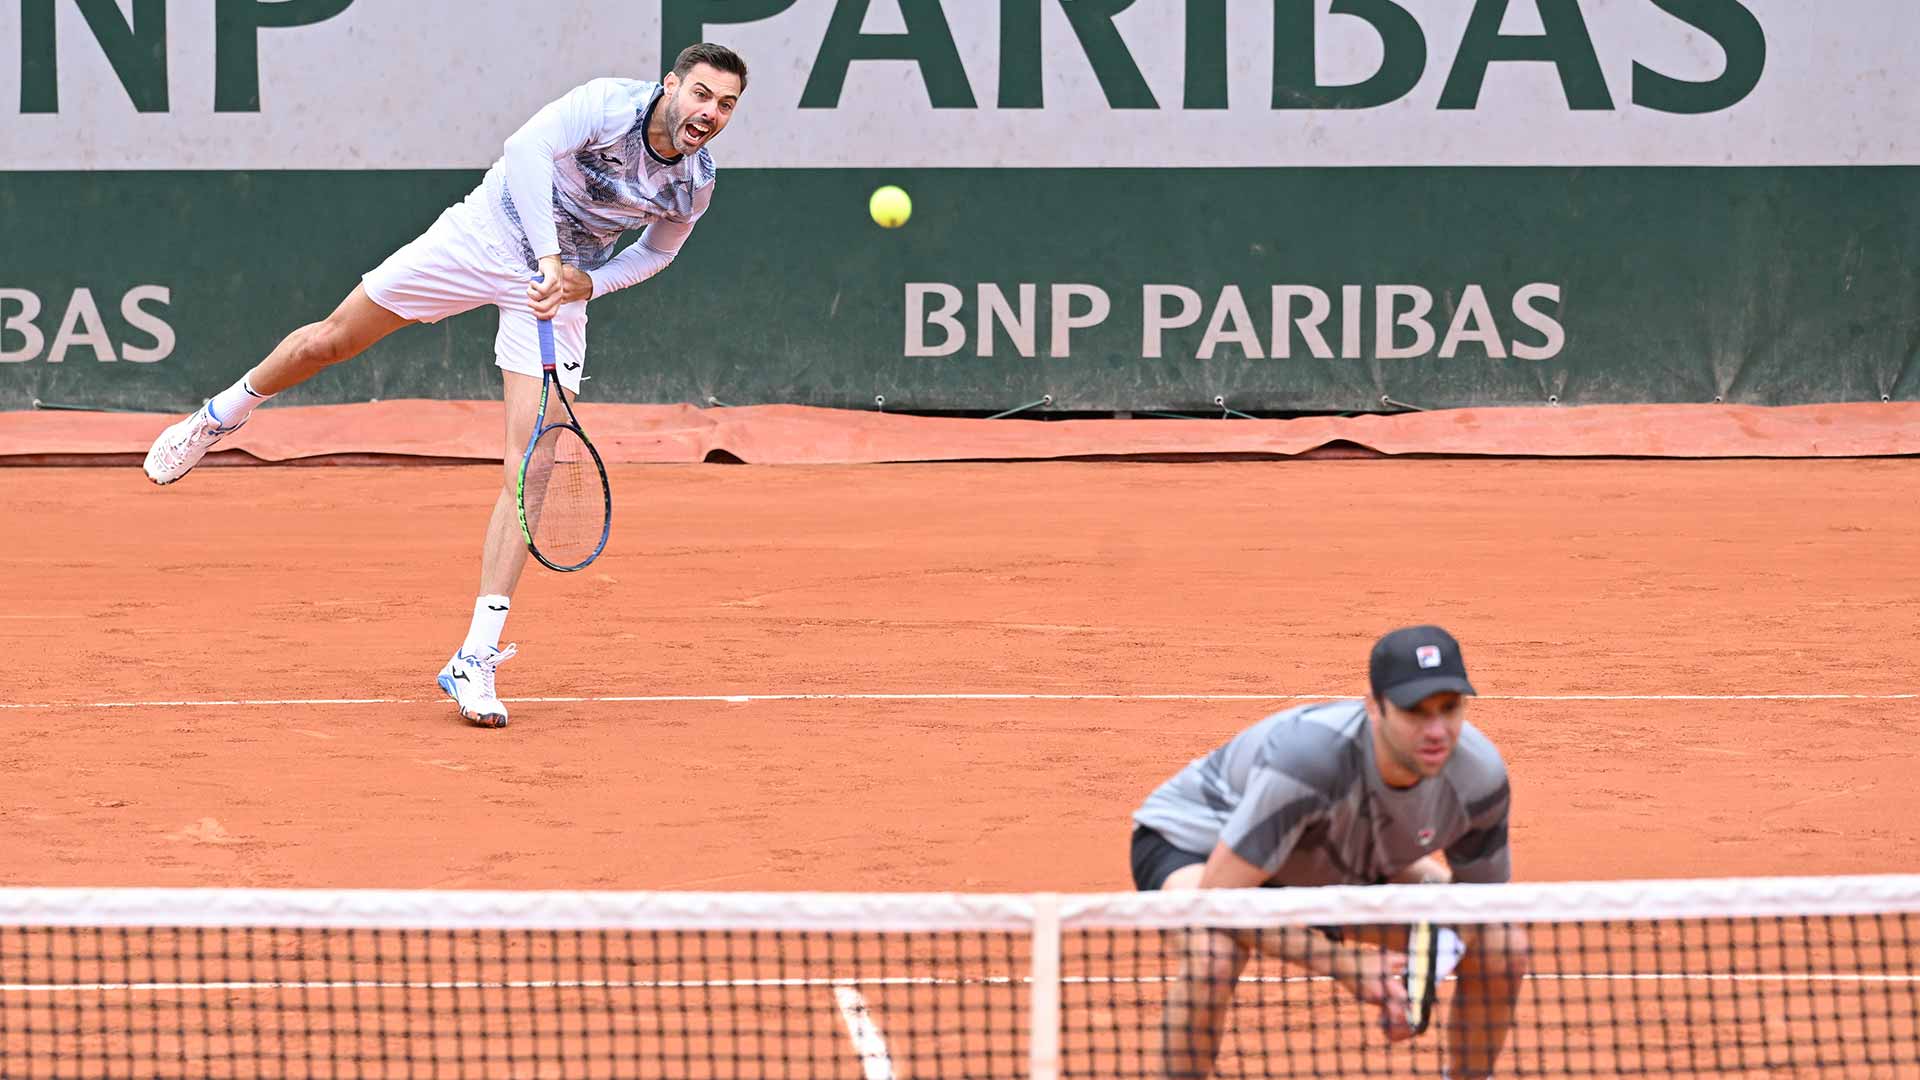 Top seeds Granollers/Zeballos advance at Roland Garros